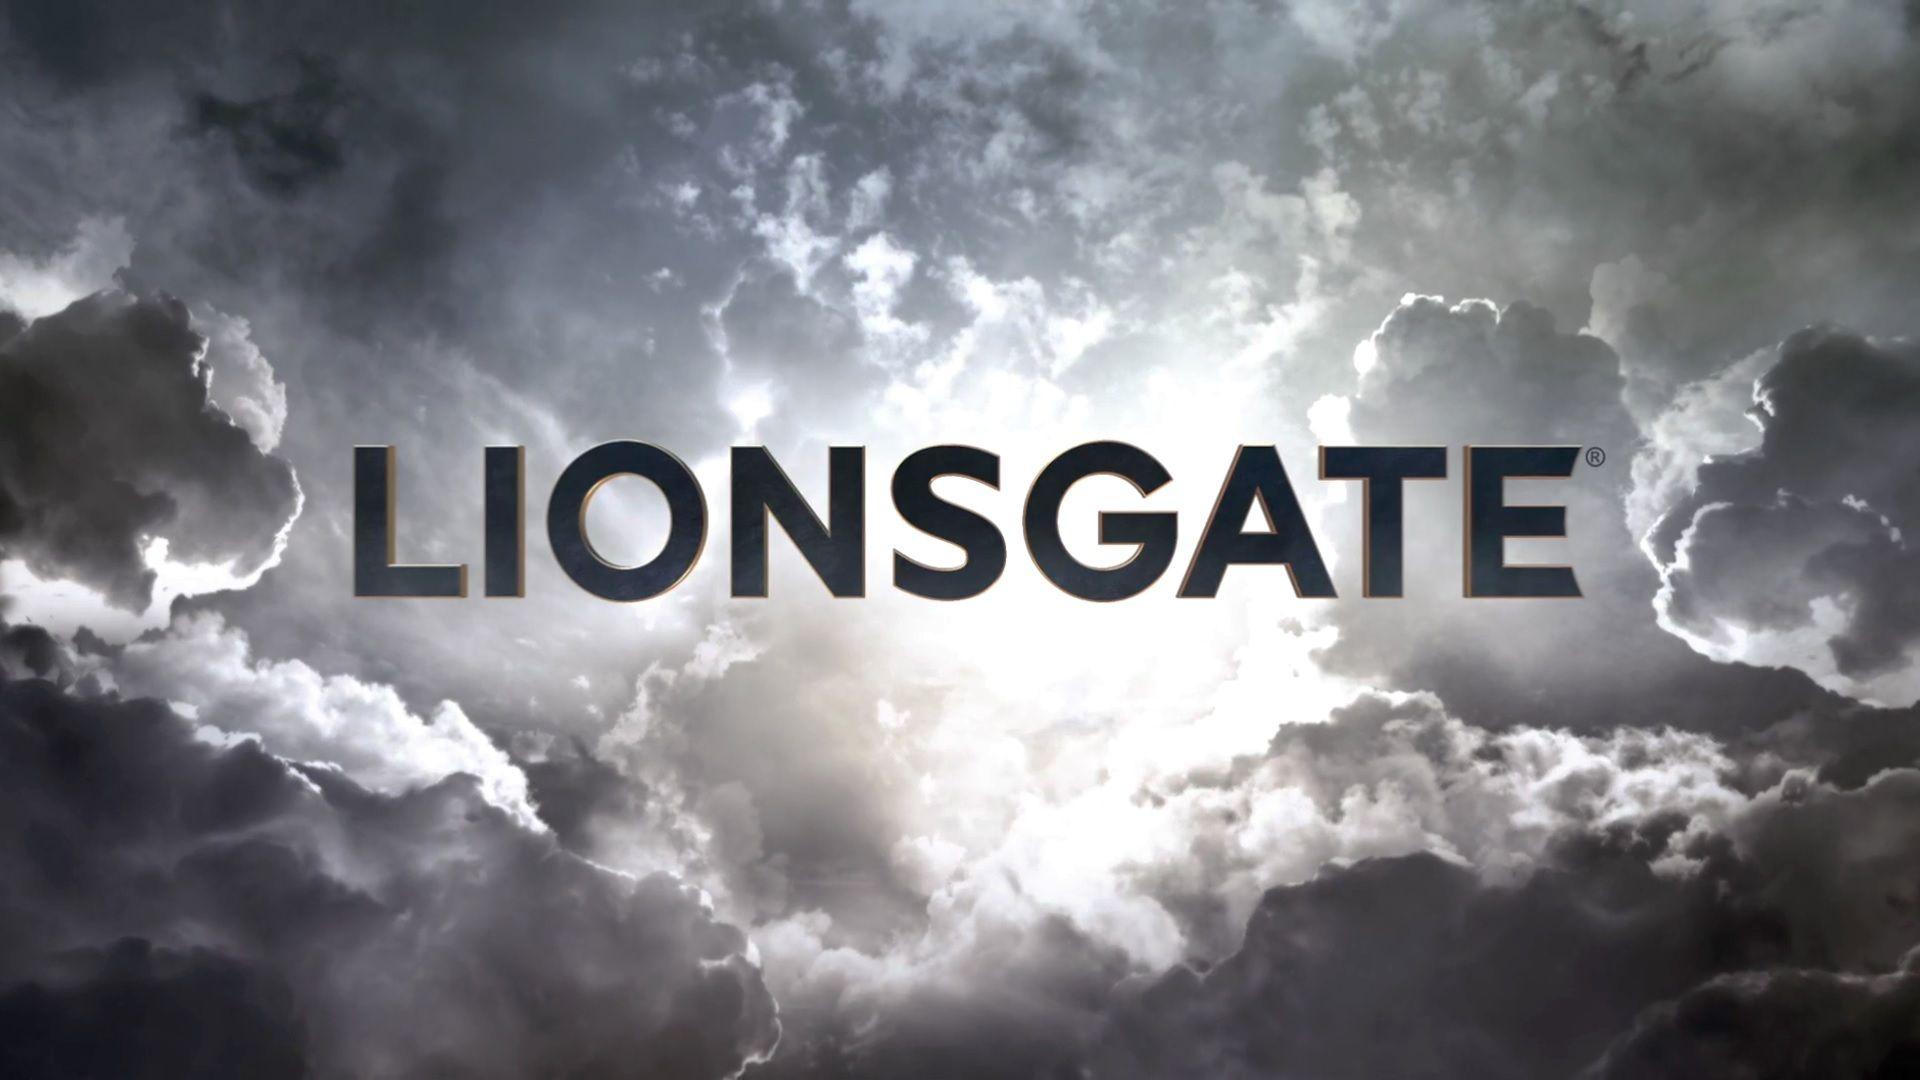 Lionsgate Logo - Image - Lionsgate Logo (2005).jpg | Logopedia | FANDOM powered by Wikia